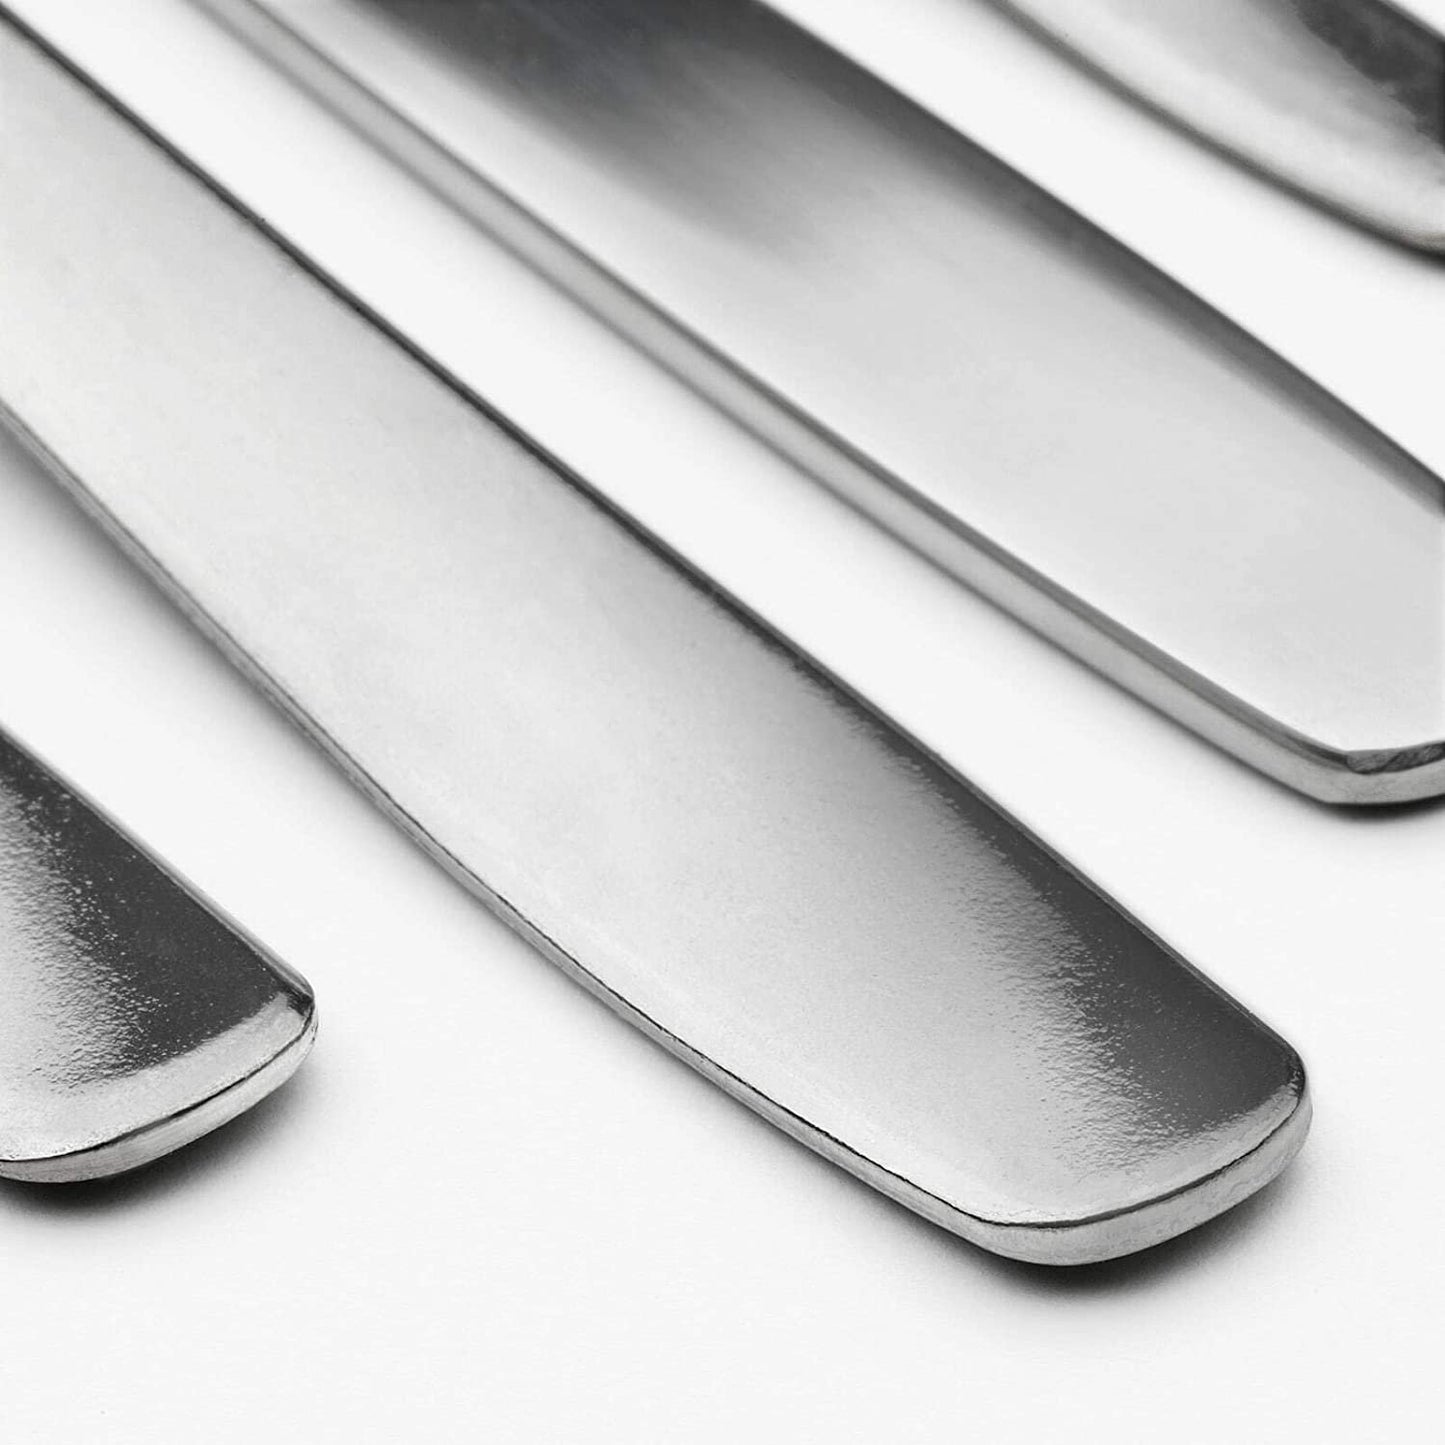 IKEA Mopsig Modern Silverware Cutlery Set 16 Piece Flatware Set - Service For 4 people 18/10 Stainless Steel Mirror Polished